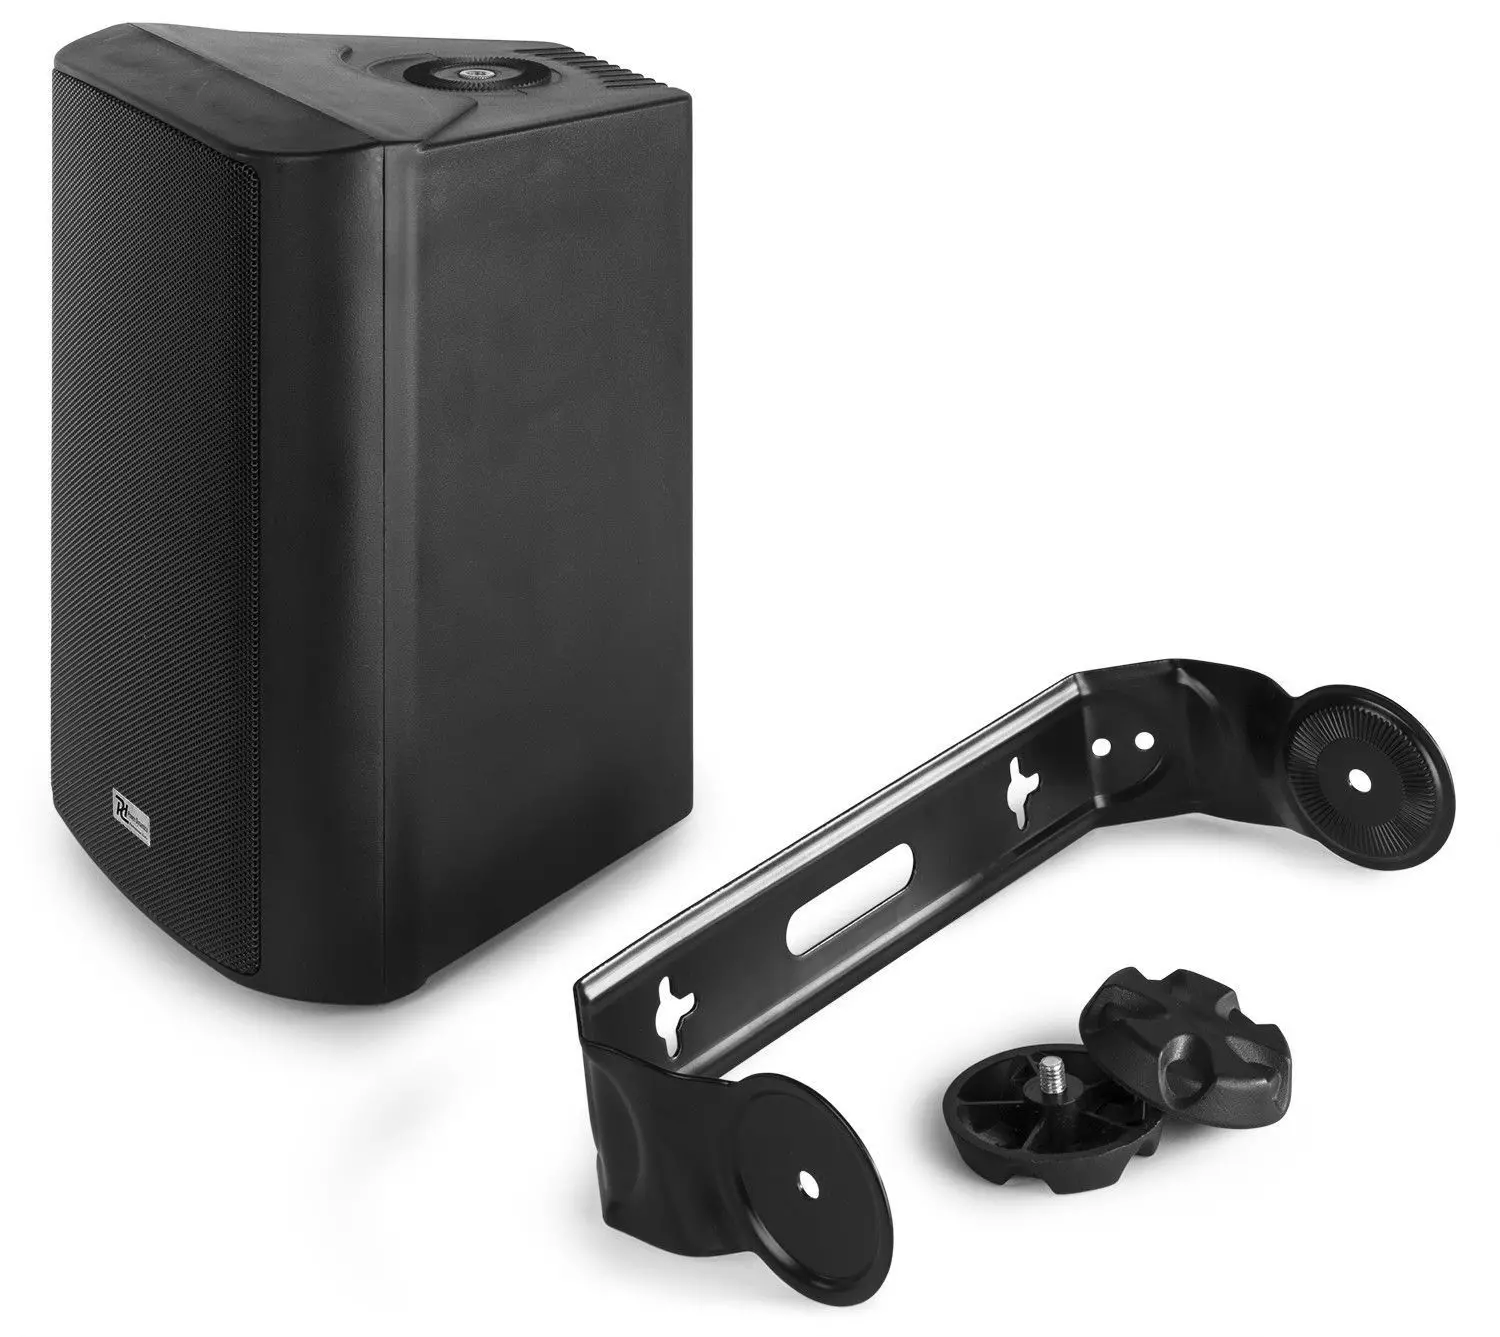 Power dynamics retourdeals installatie speakers|hifi luidsprekers|installatie speakers|speakersets